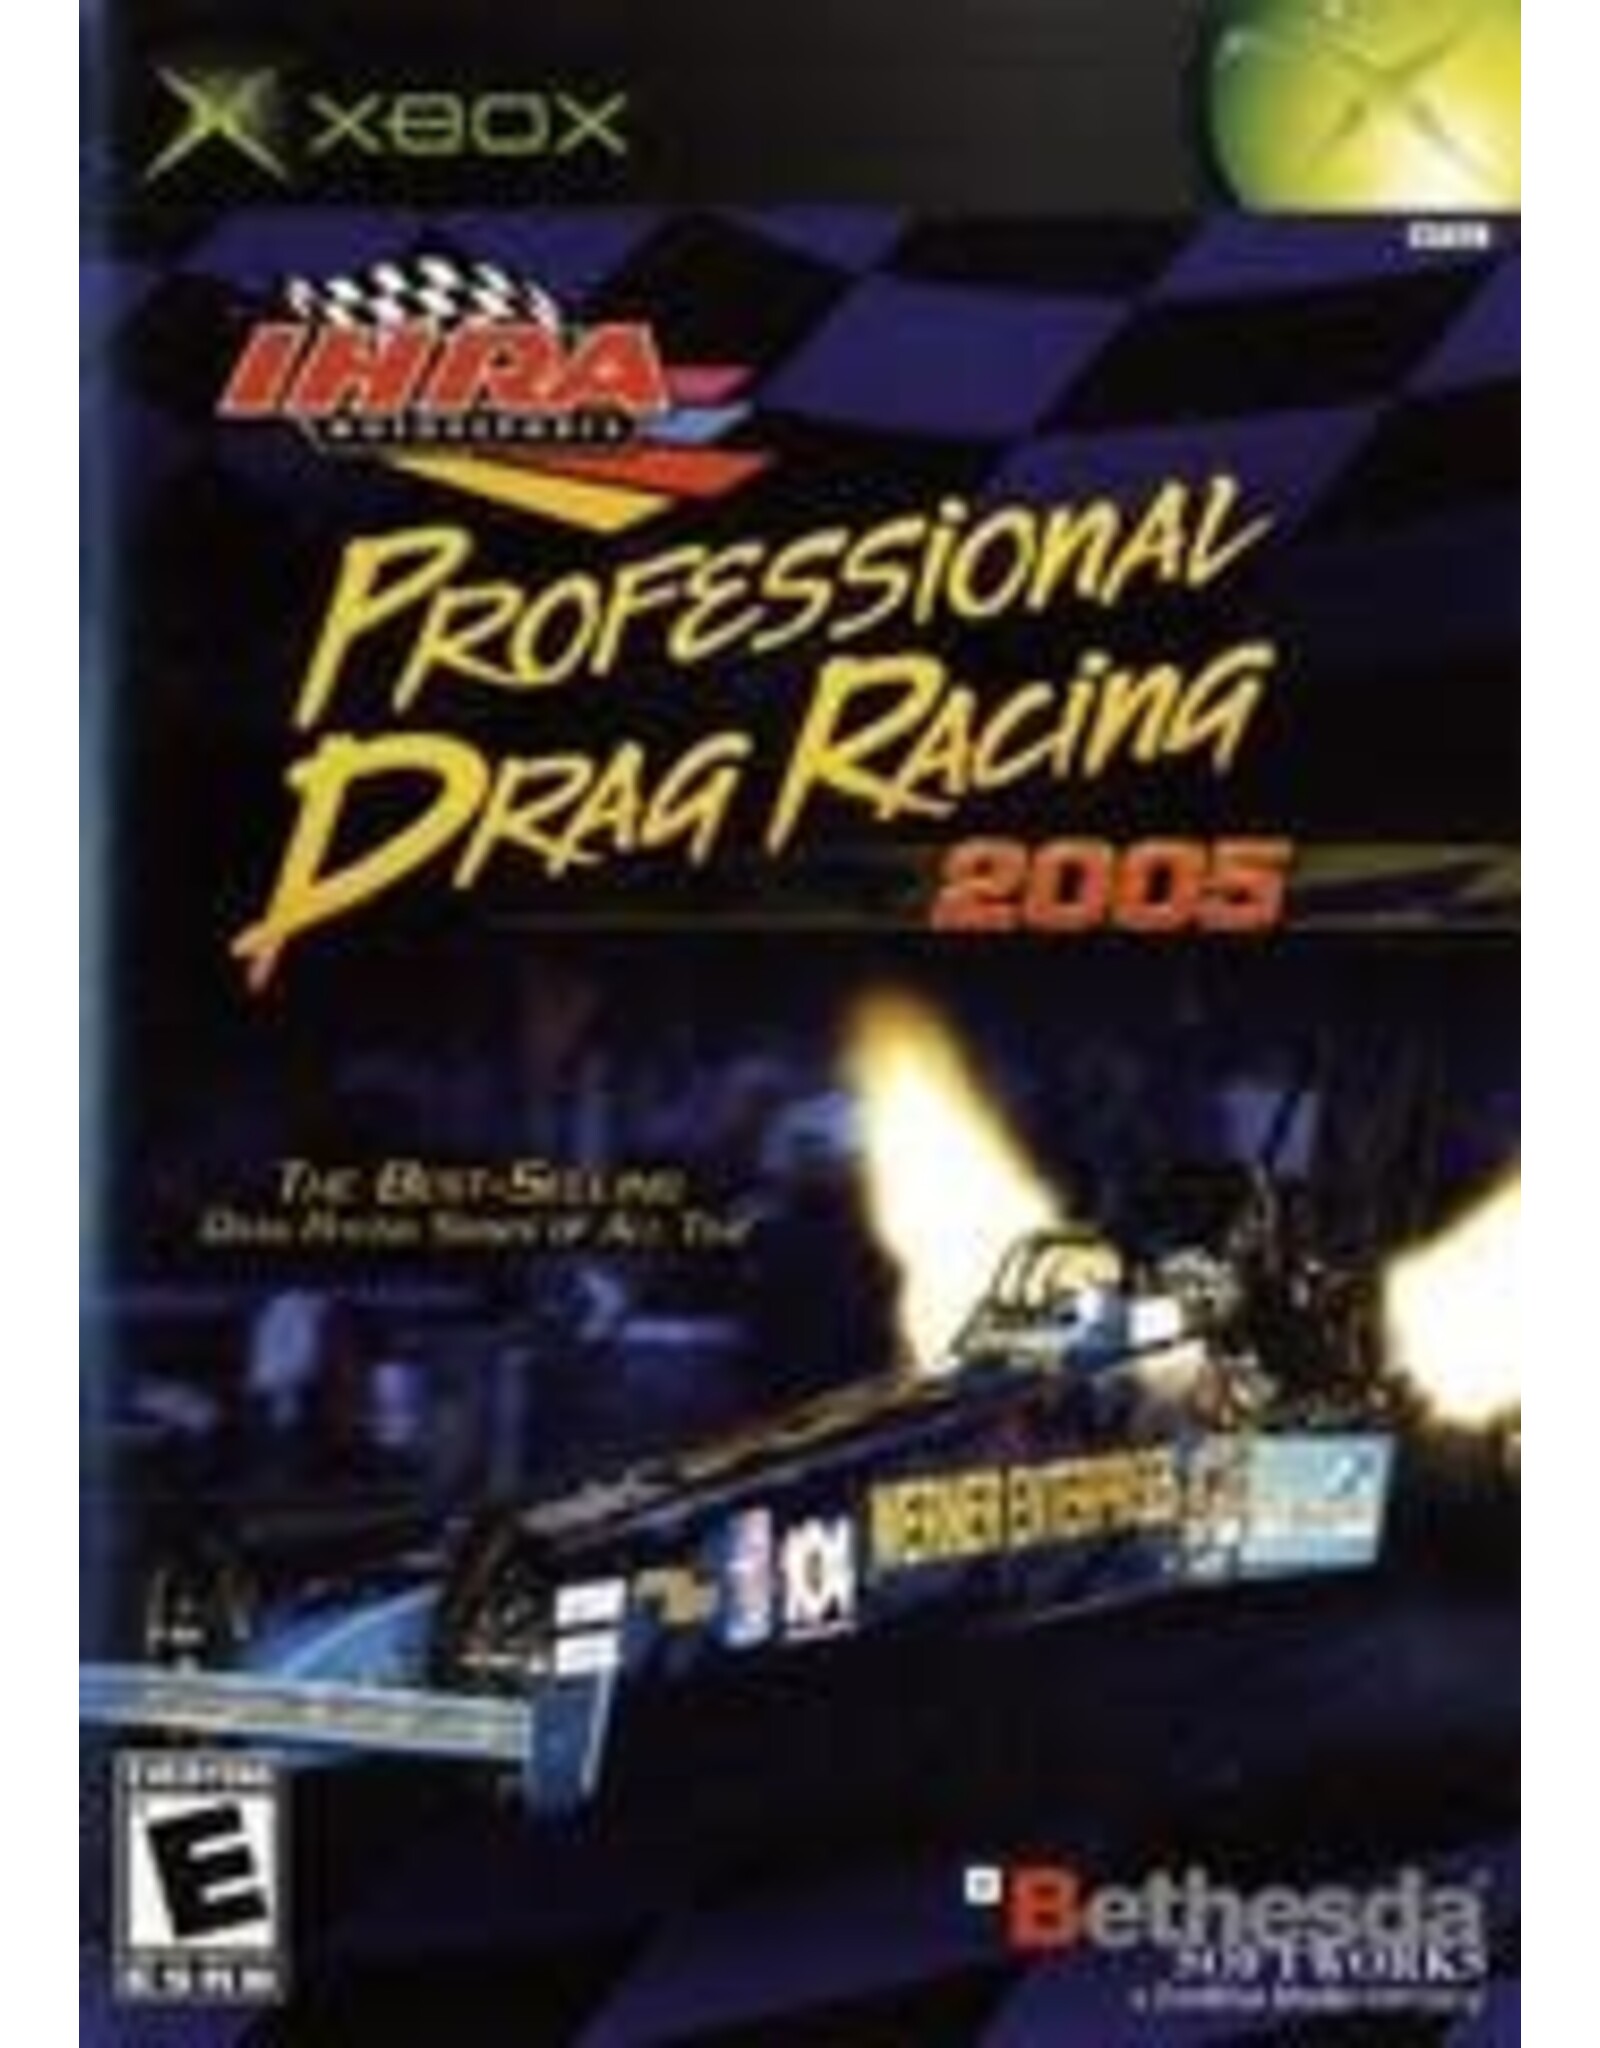 Xbox IHRA Professional Drag Racing 2005 (No Manual)